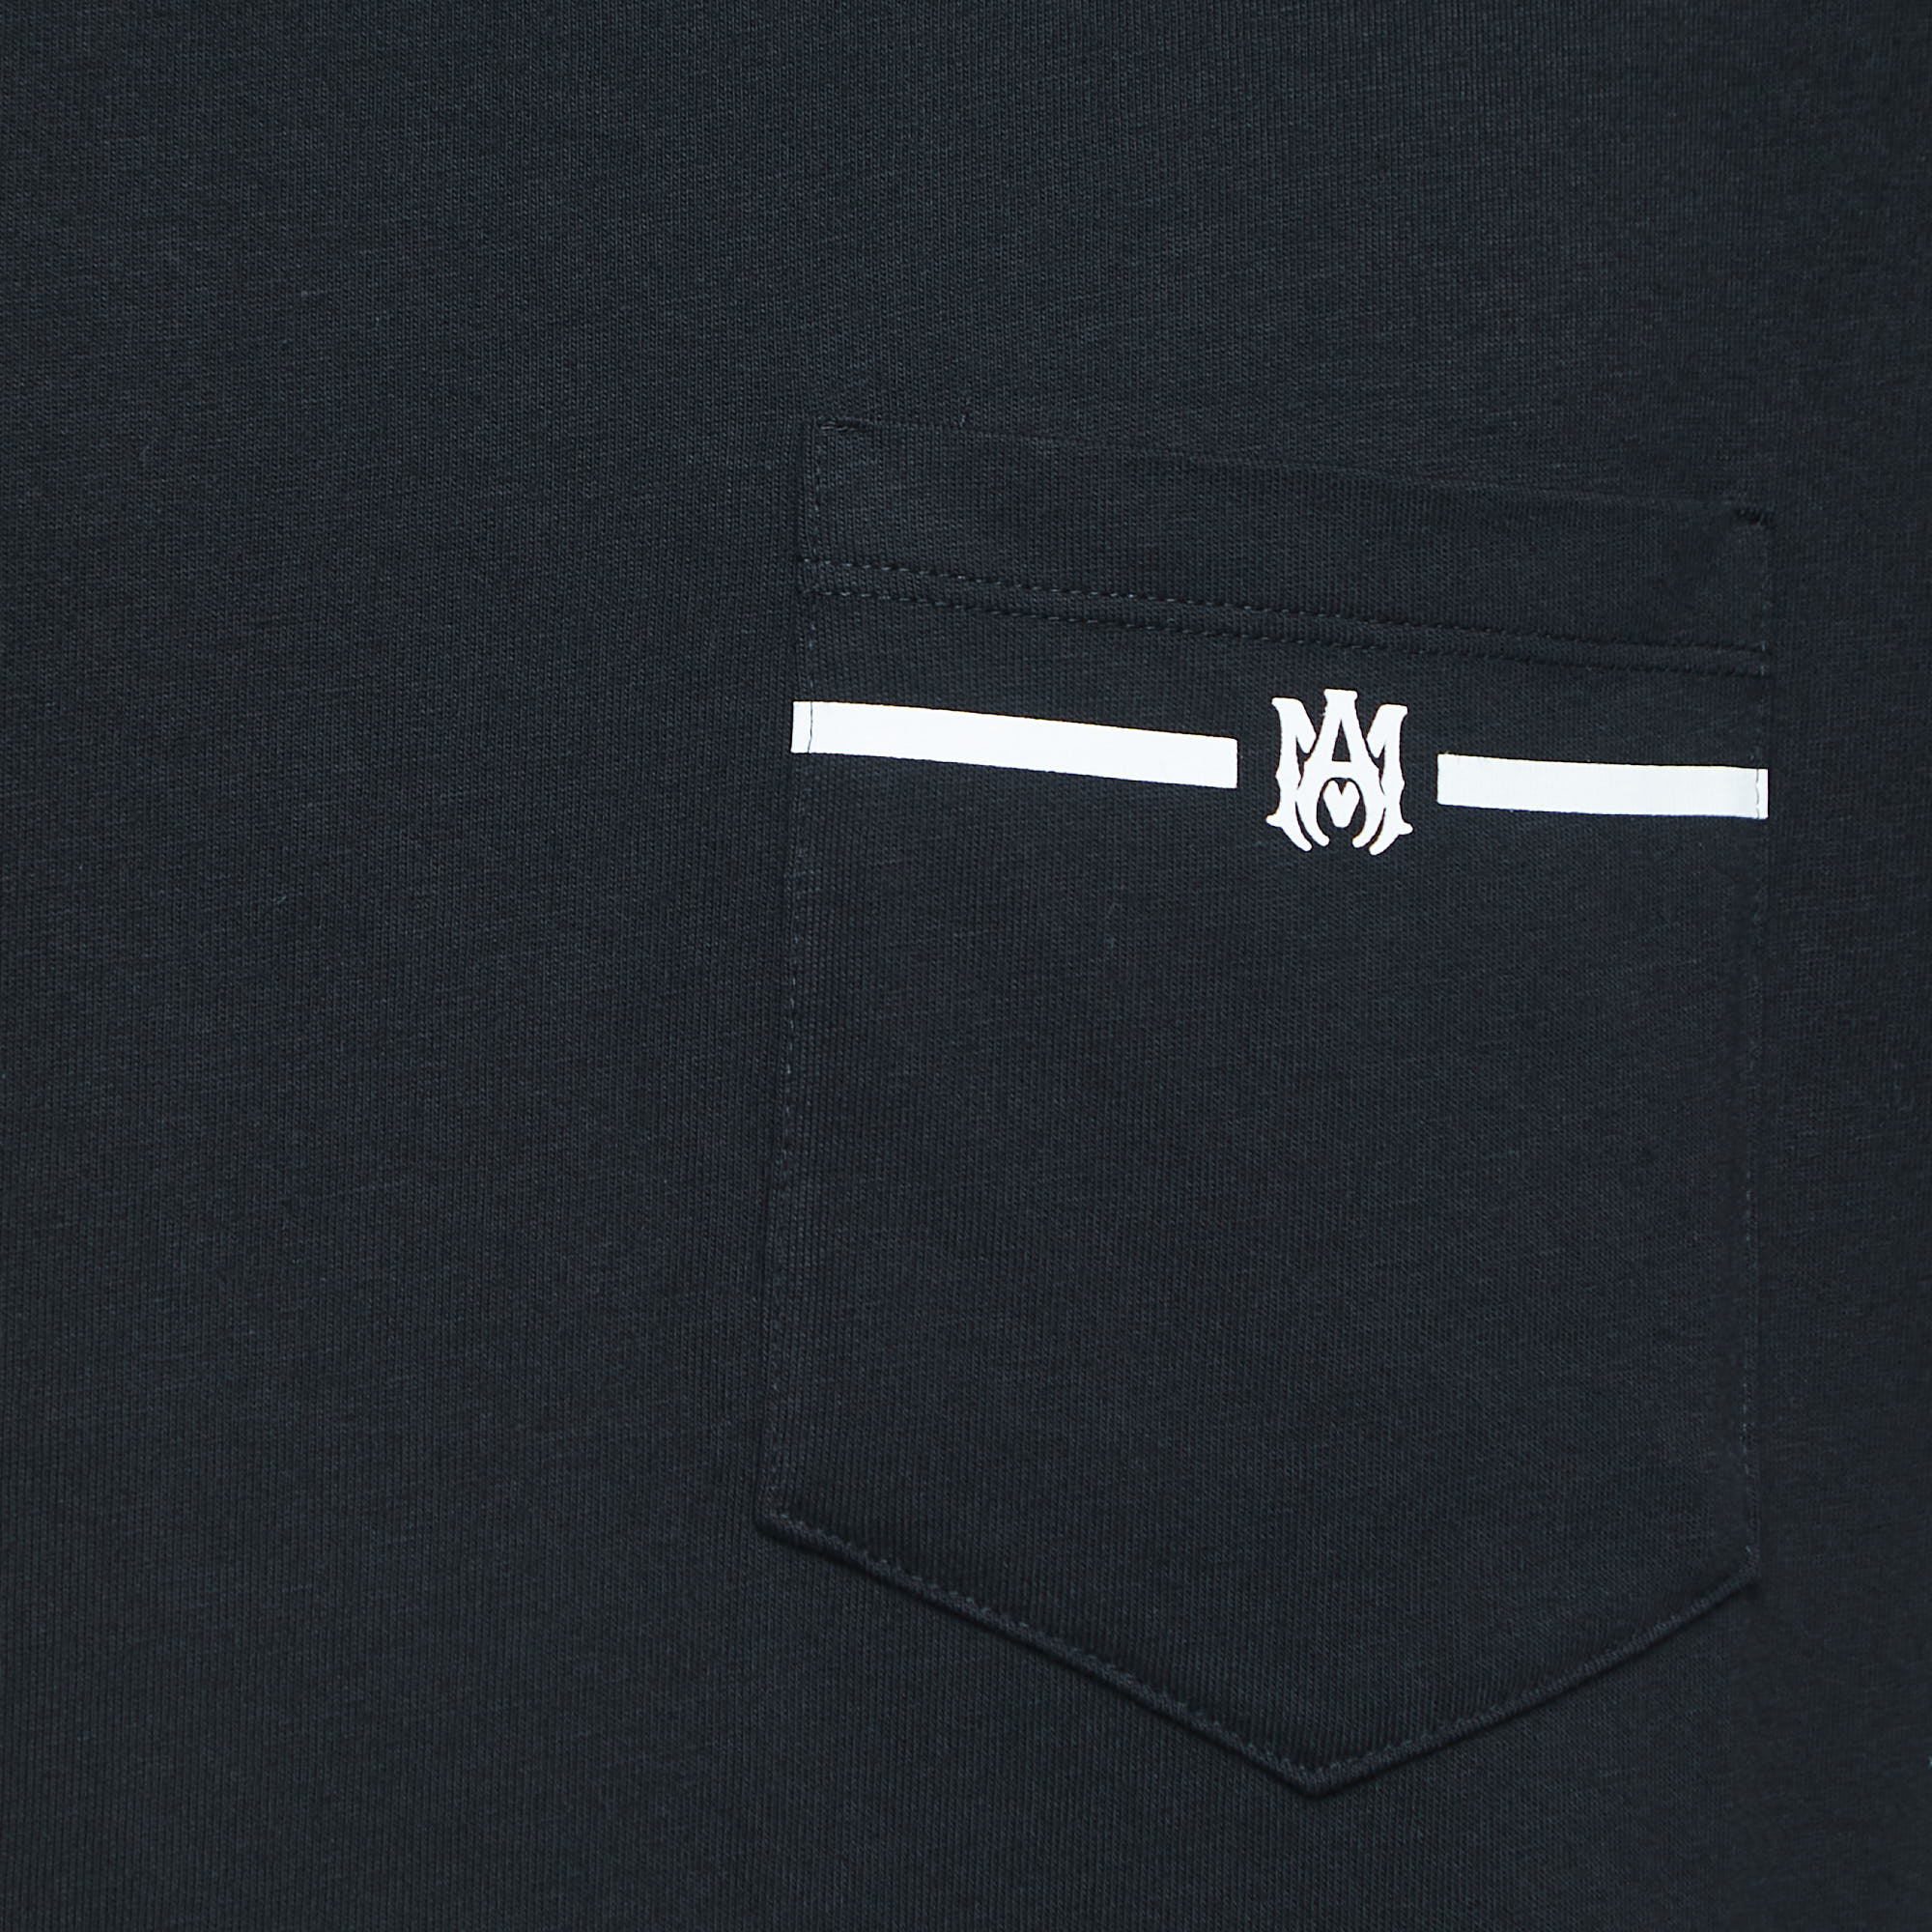 Amiri Black Cotton Logo Print Pocket T-Shirt M